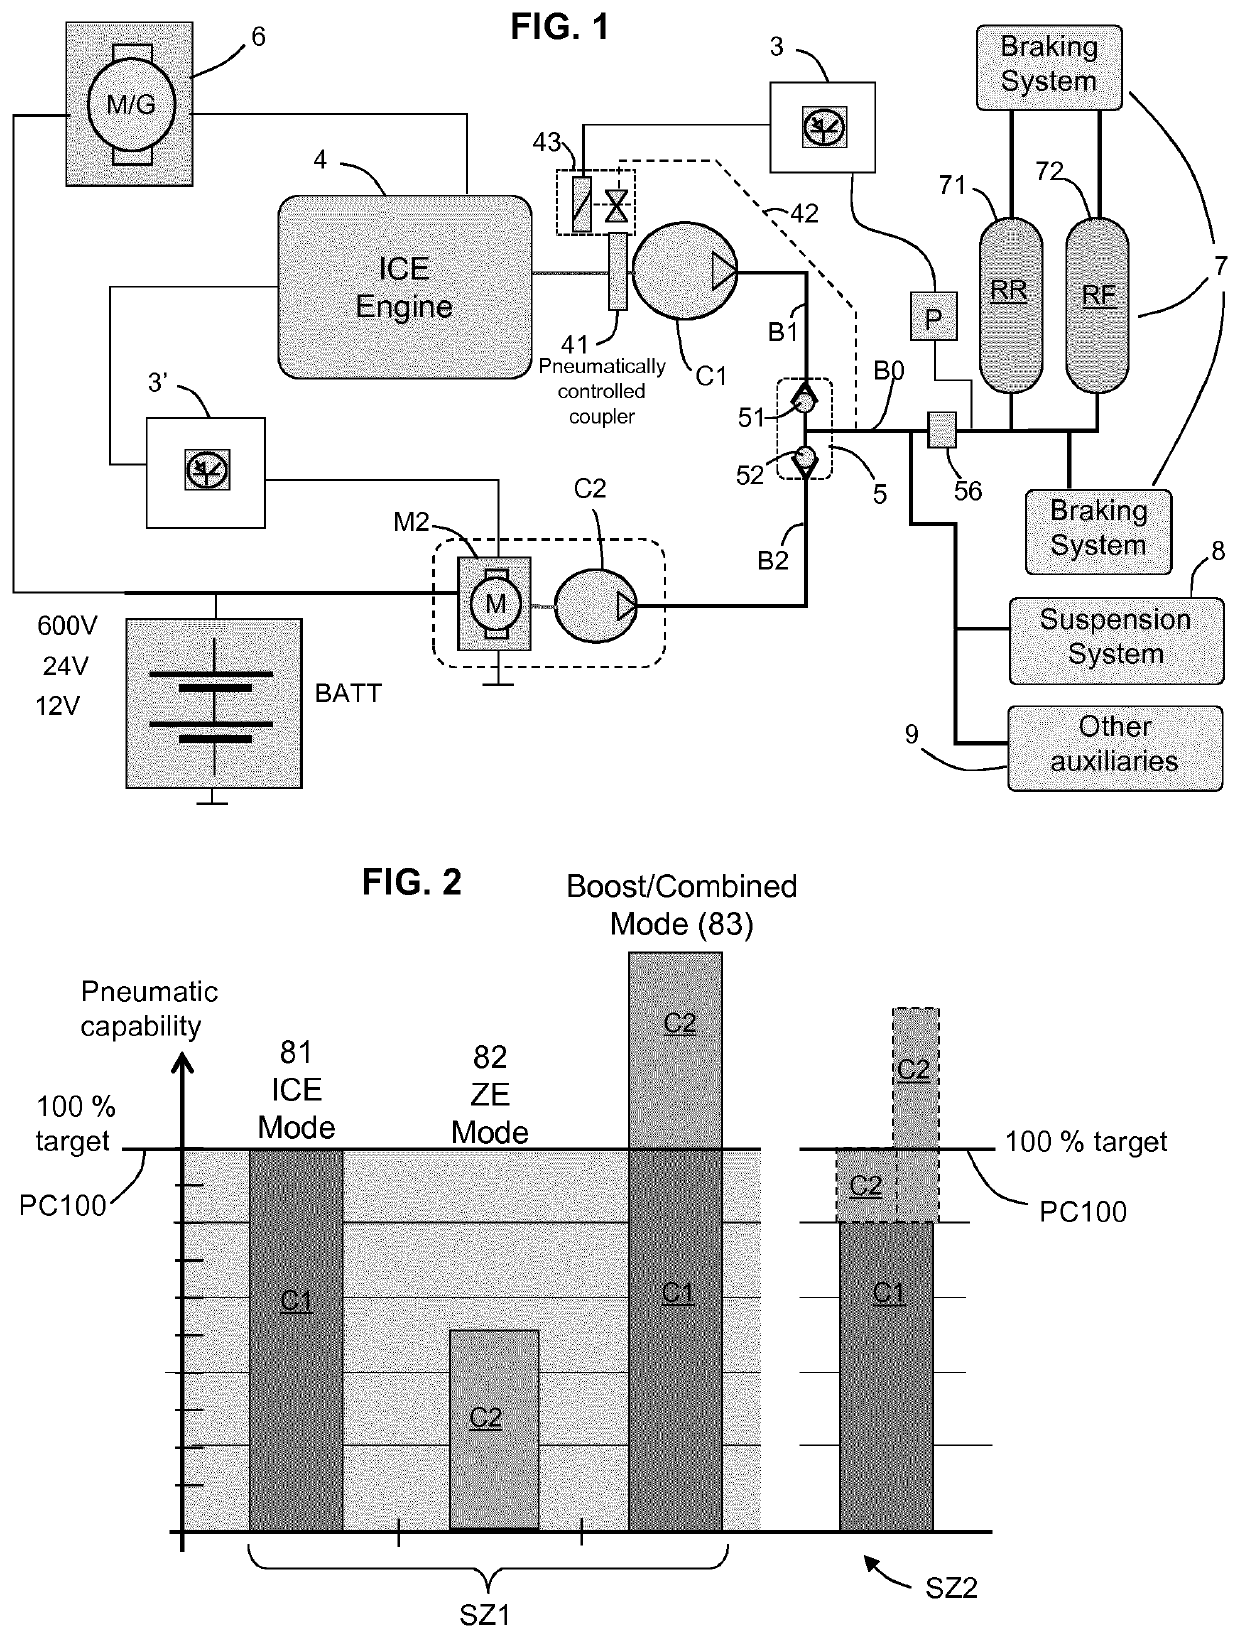 Dual air compressor for hybrid vehicles